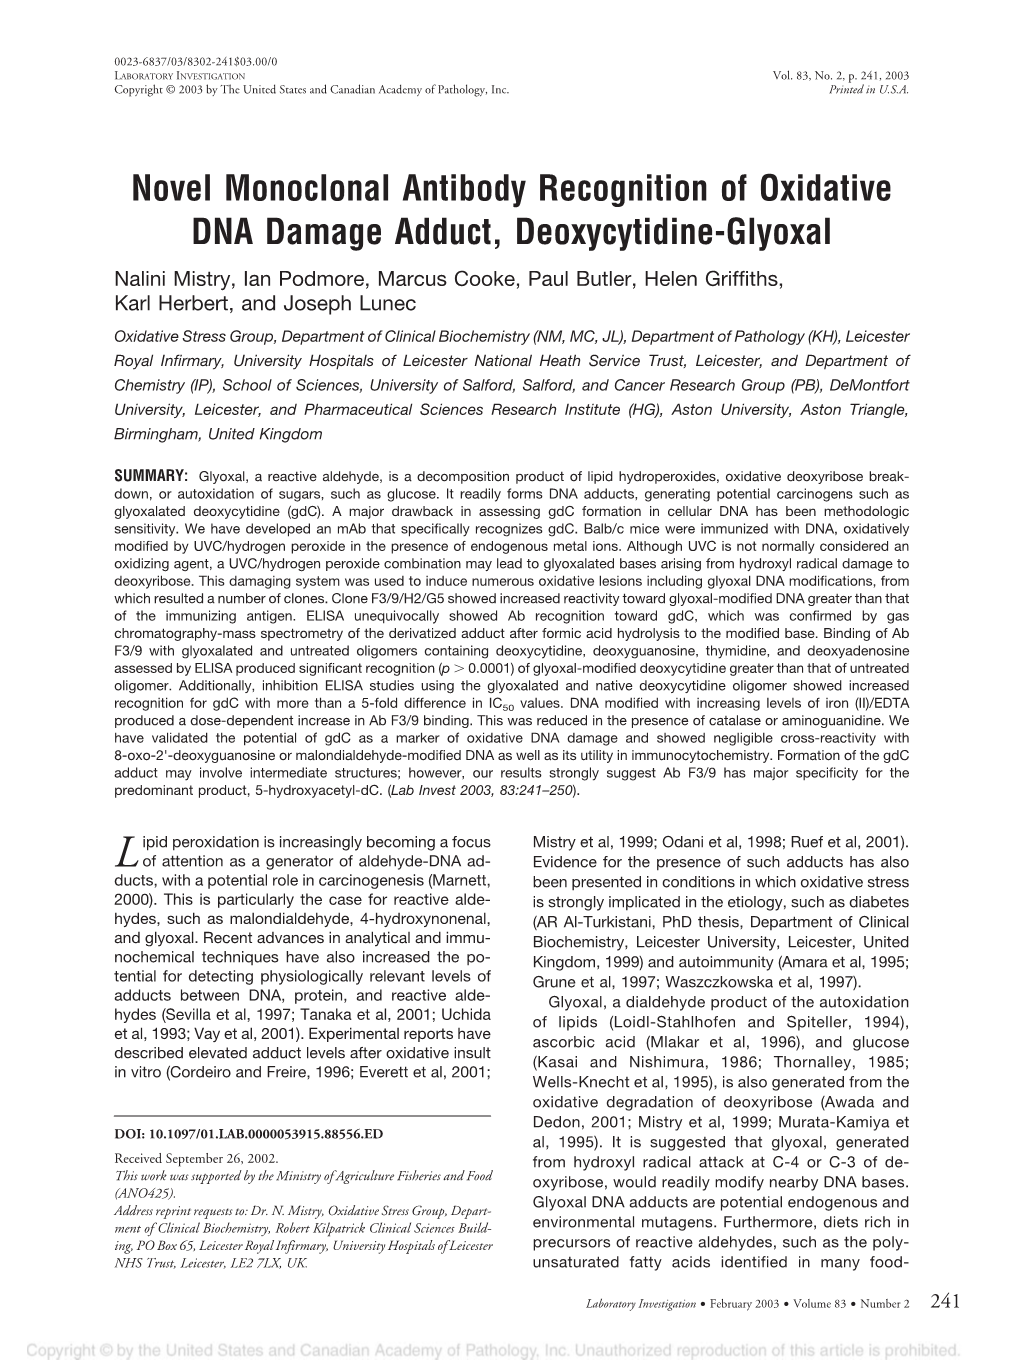 Novel Monoclonal Antibody Recognition of Oxidative DNA